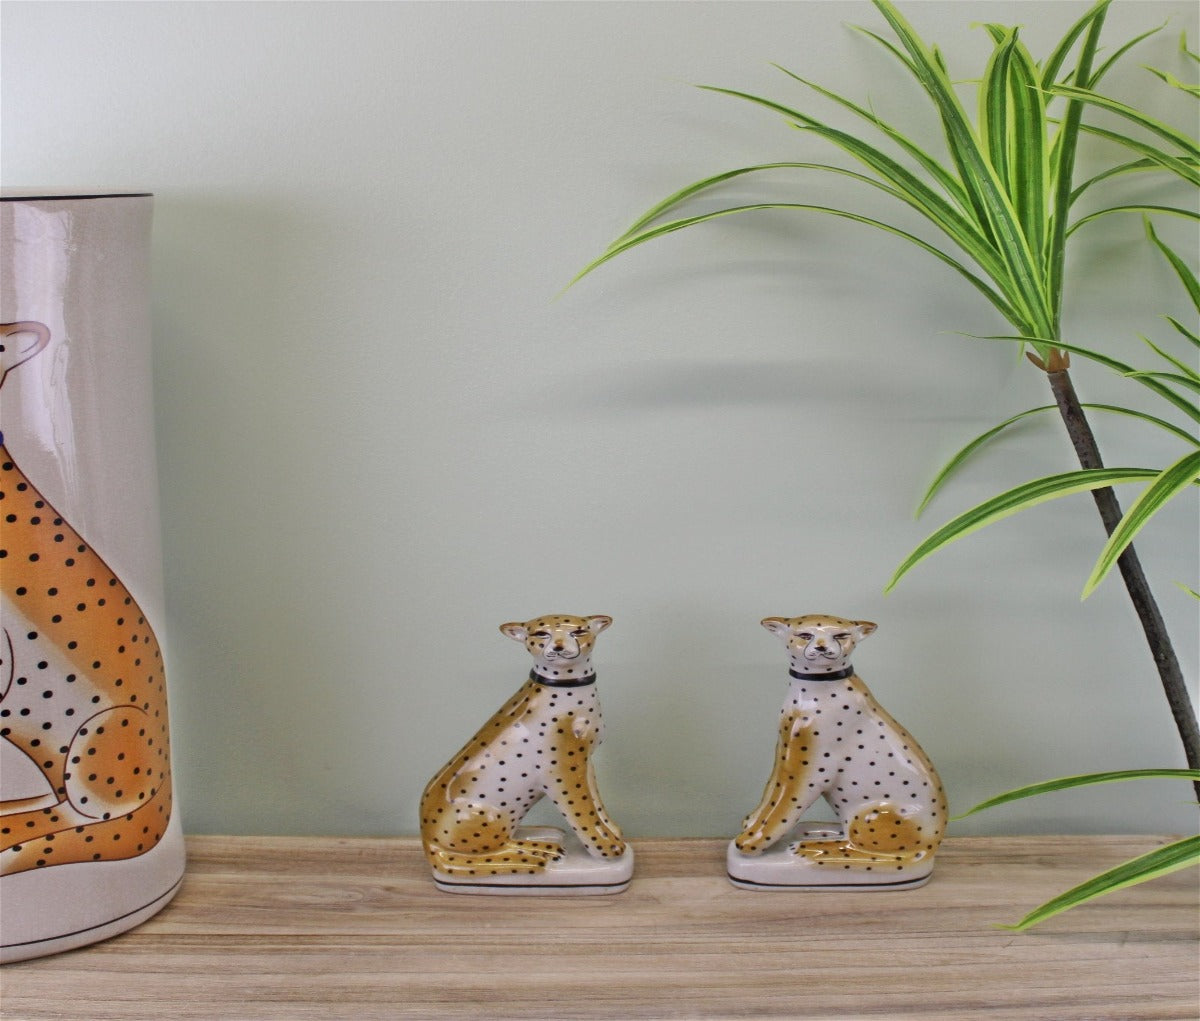 Set of 2 Left & Right Facing Ceramic Crackle Glaze Leopard Ornaments